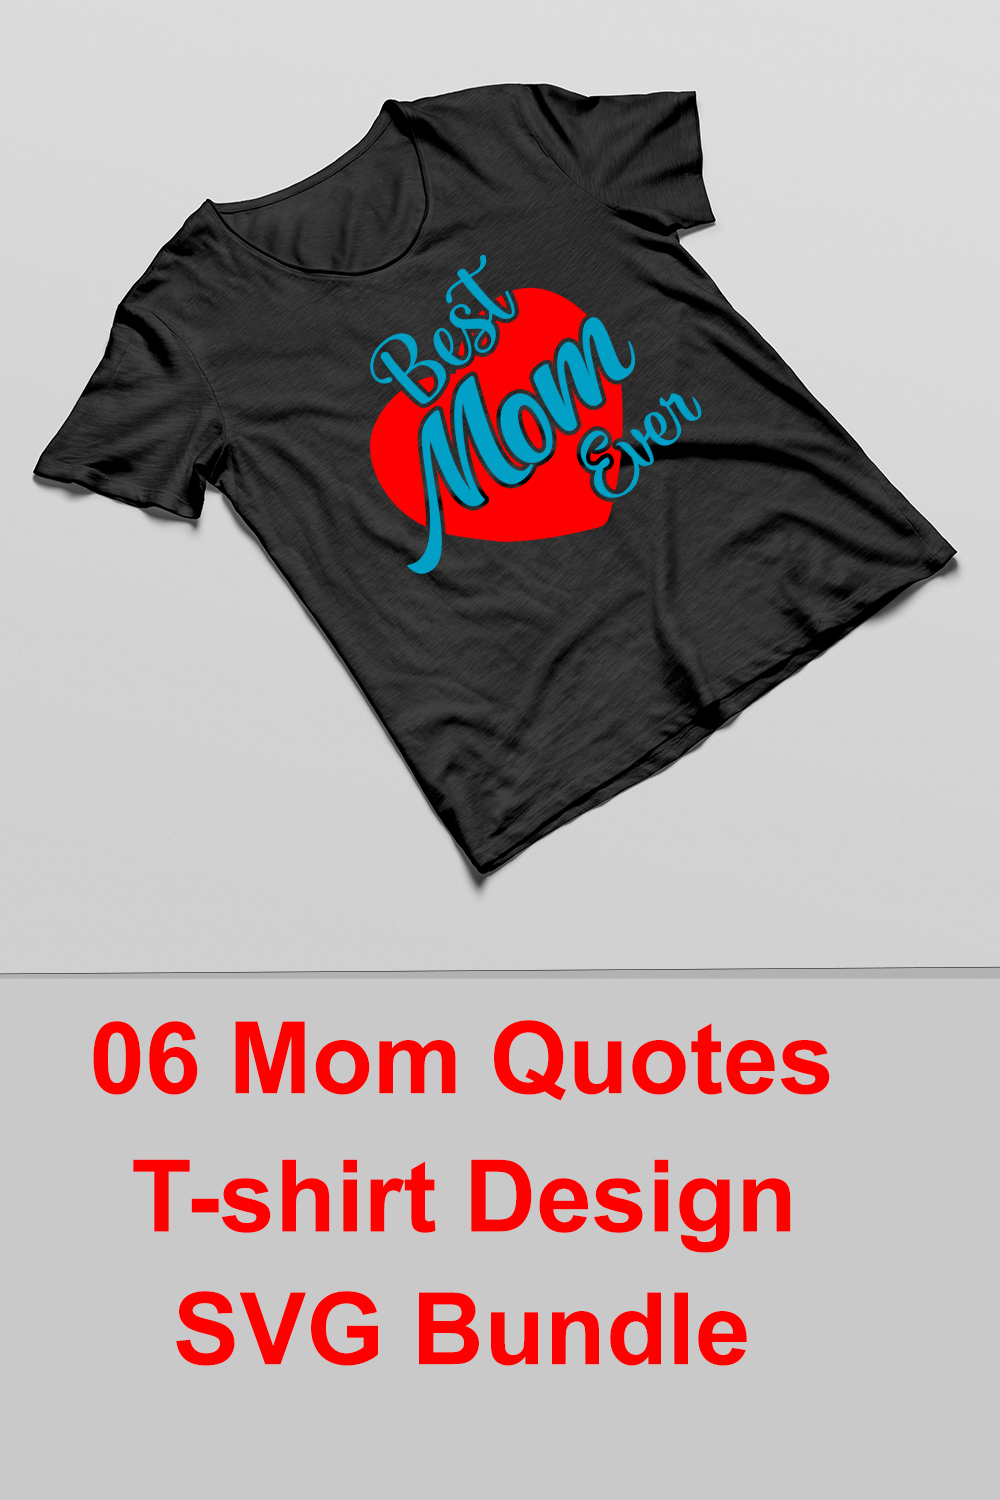 06 Mom Quotes T-shirt Design SVG Bundle pinterest preview image.